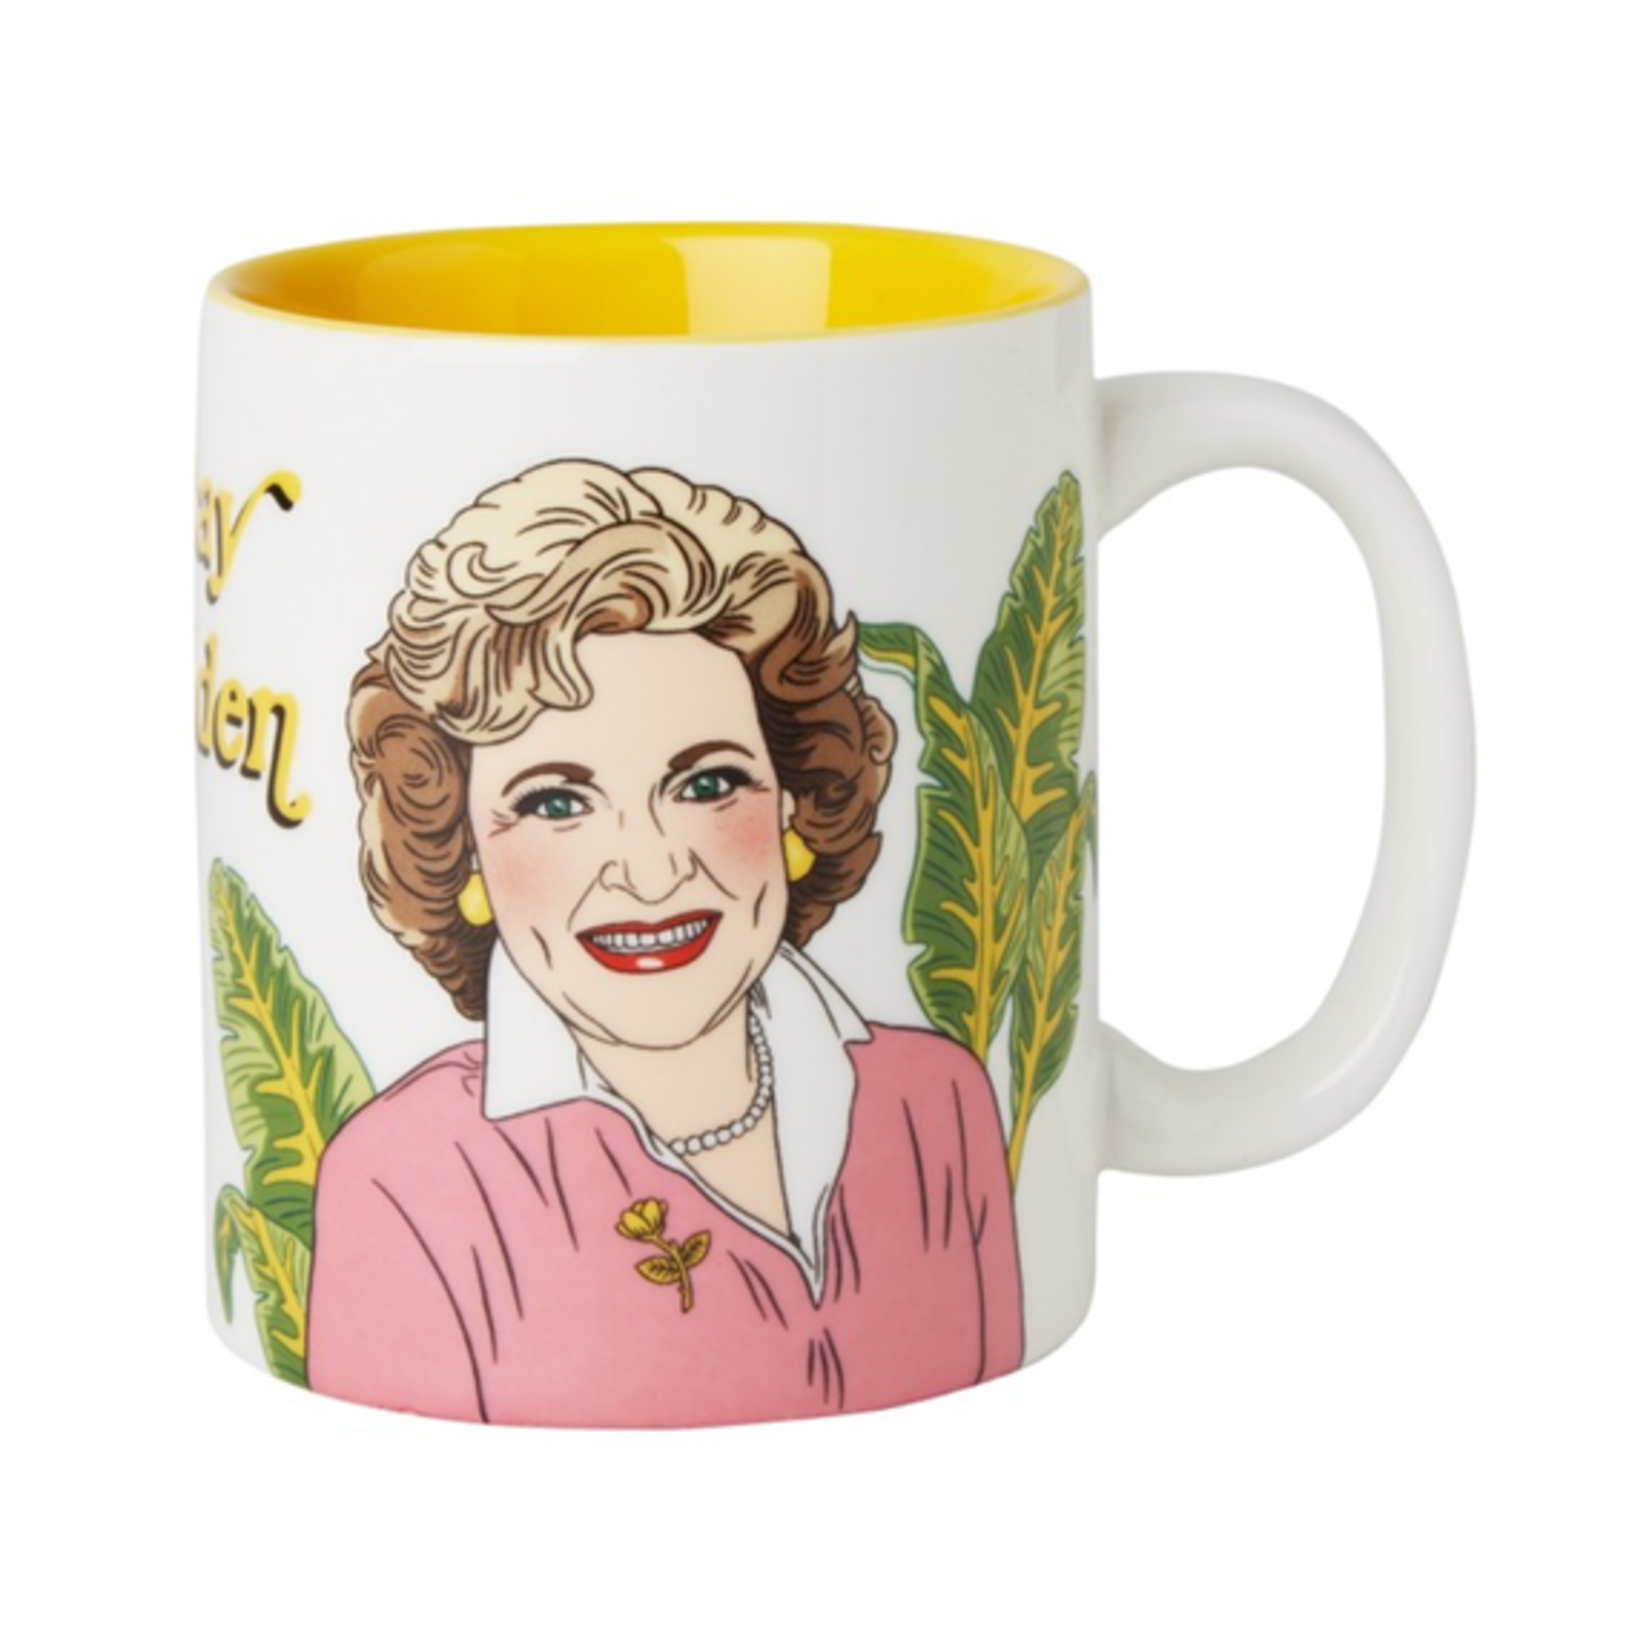 The Found Betty White Mug